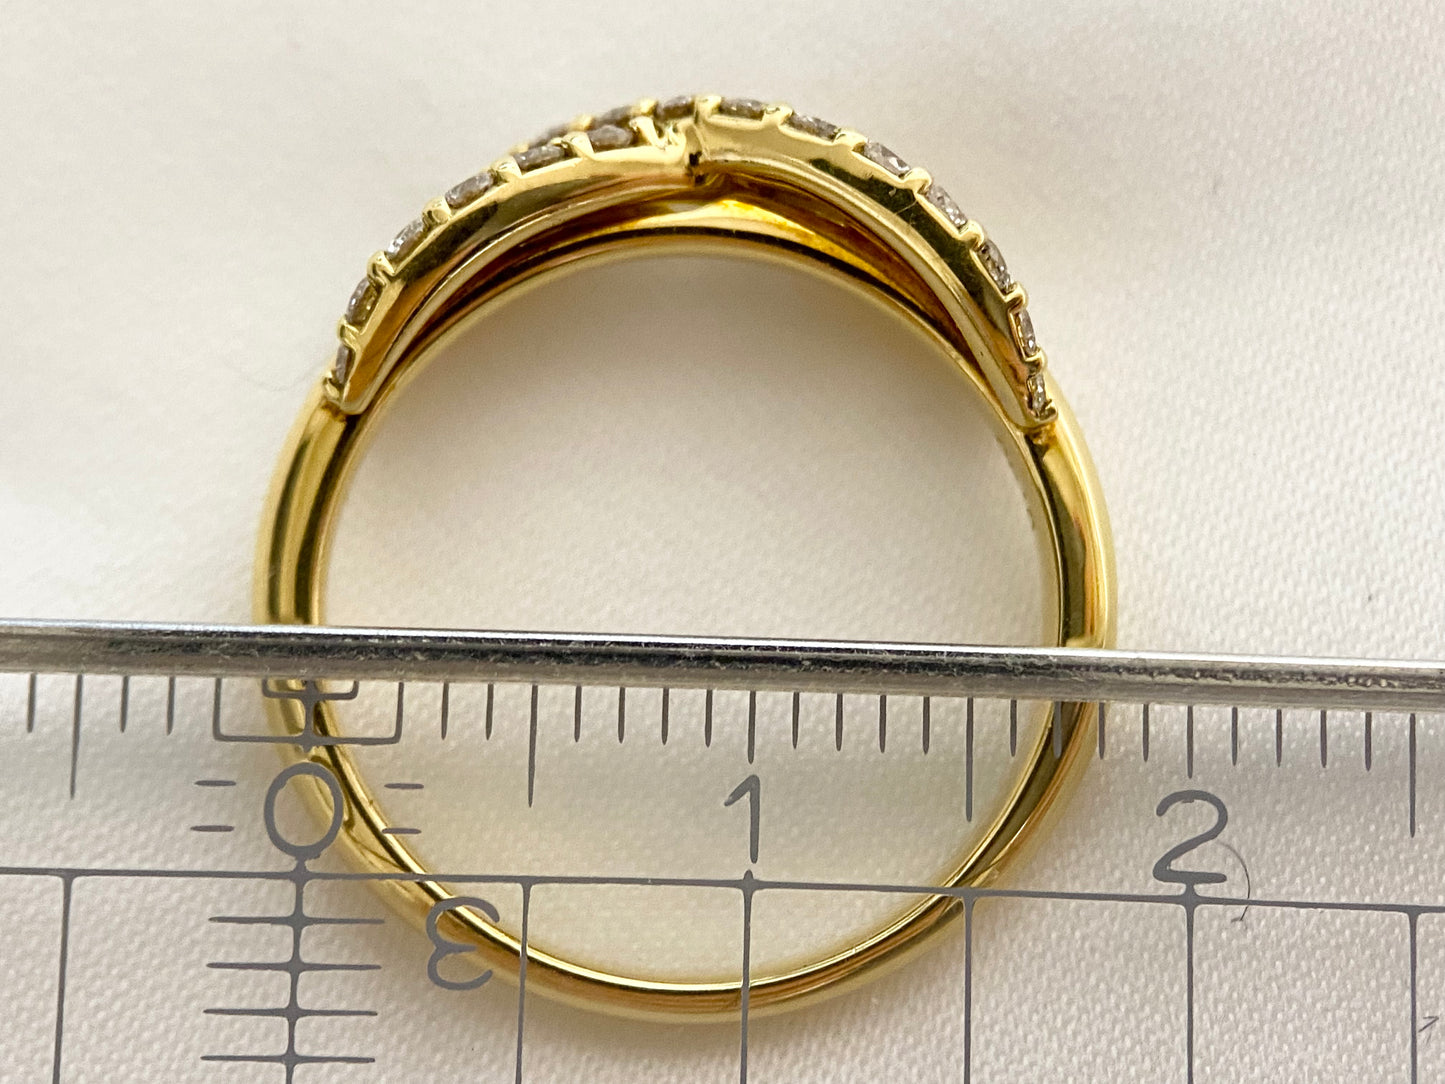 [New] [Rare Stone] Bicolor Sapphire Ring Jewelry Pt900